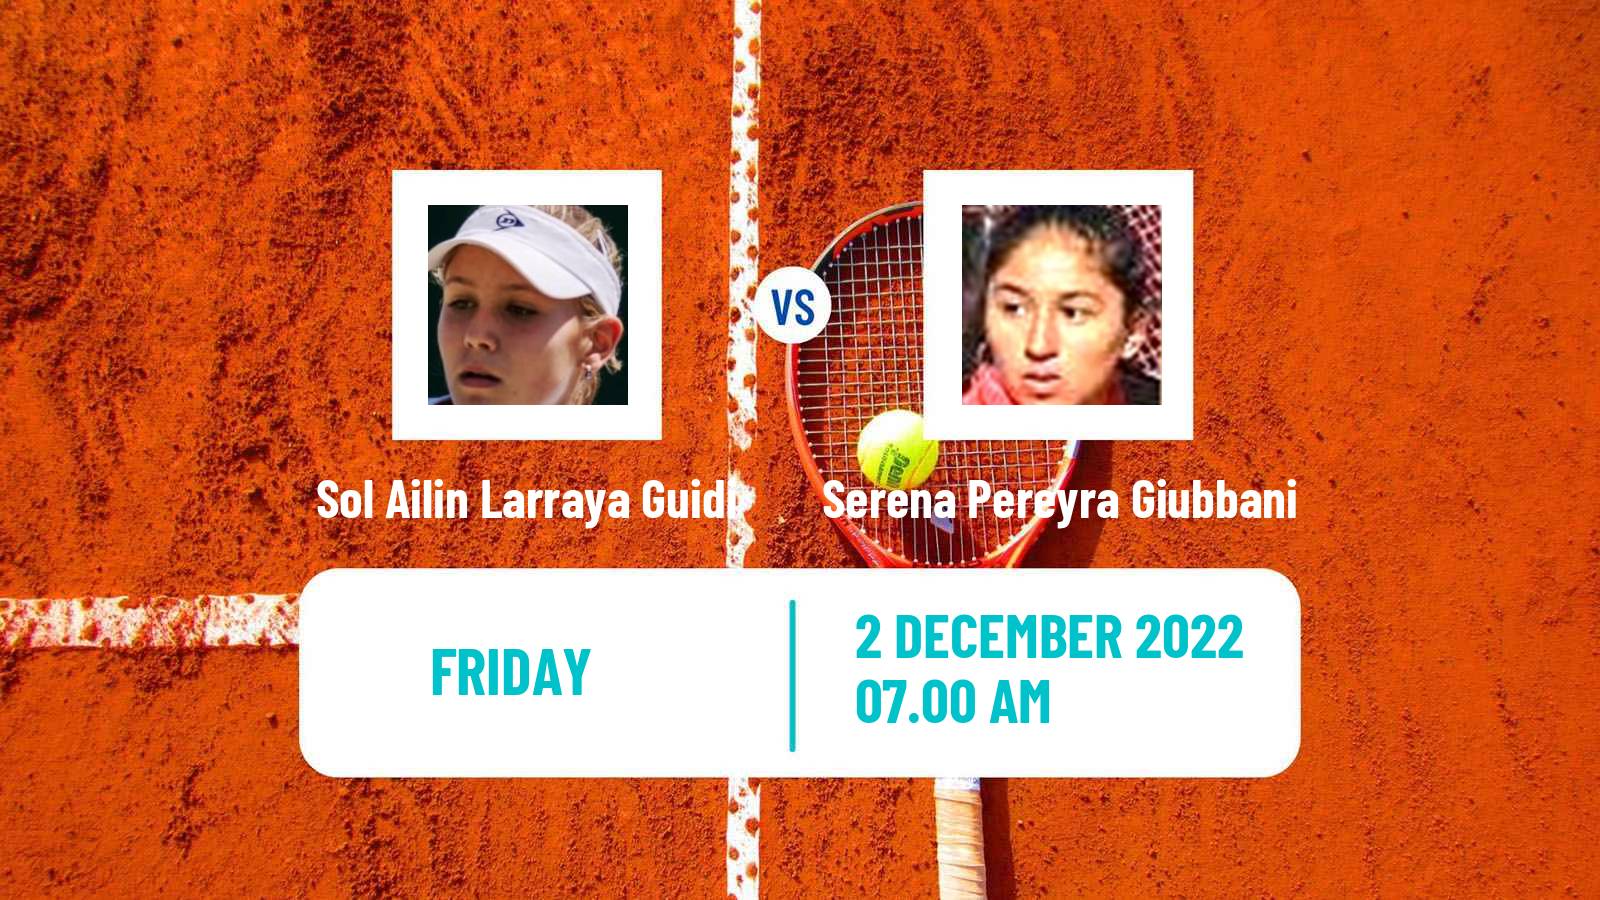 Tennis ITF Tournaments Sol Ailin Larraya Guidi - Serena Pereyra Giubbani